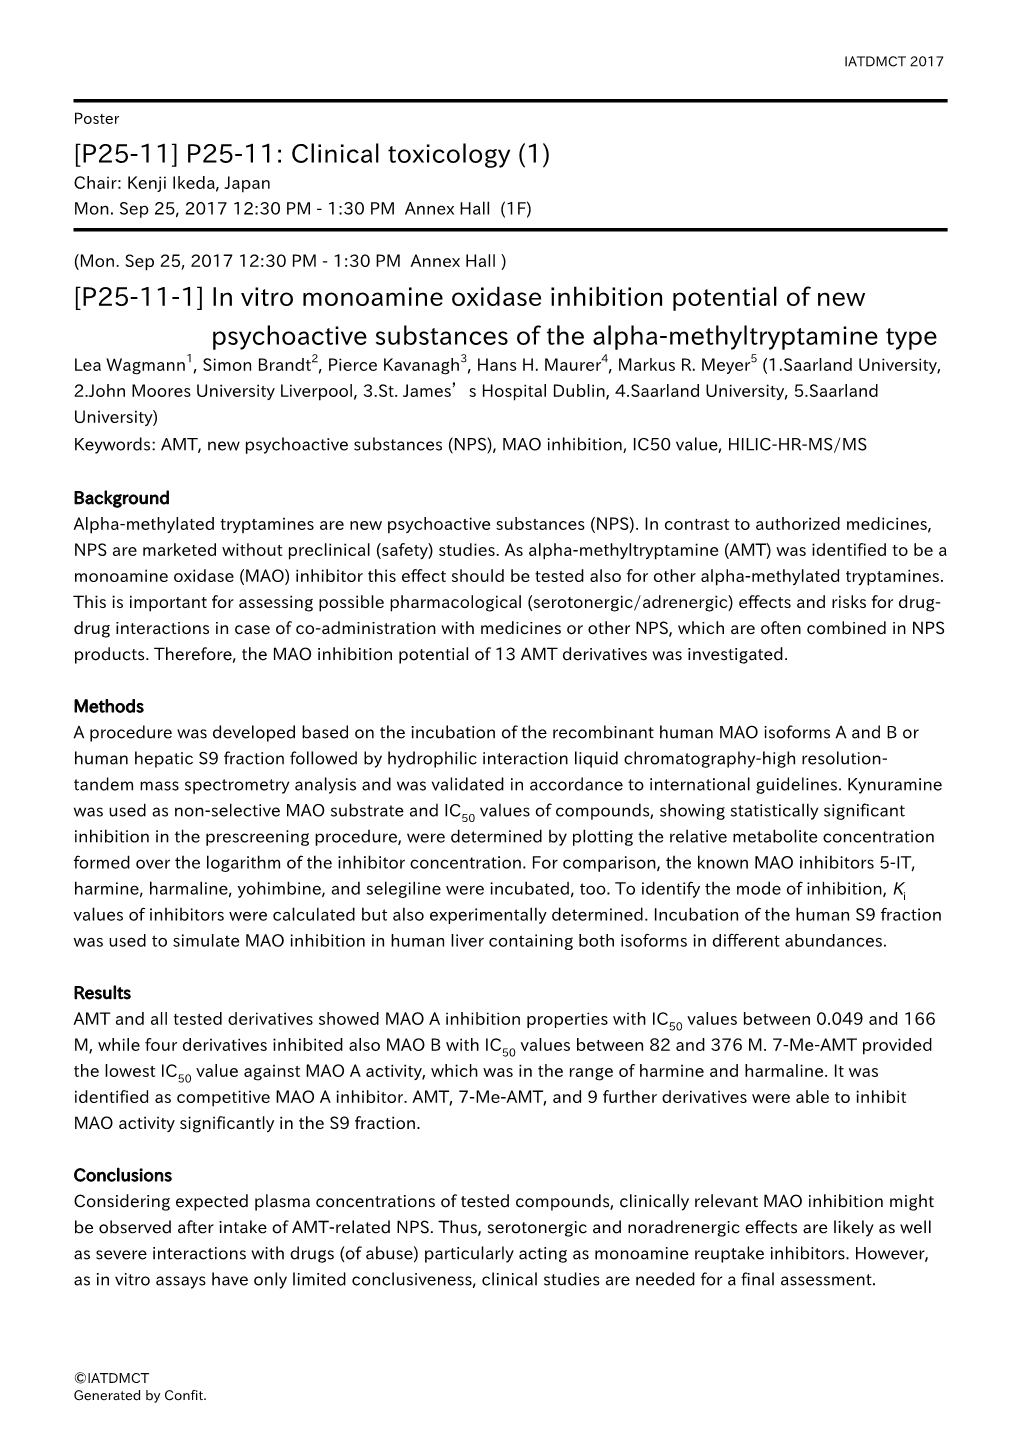 P25-11: Clinical Toxicology (1) in Vitro Monoamine Oxidase Inhibition